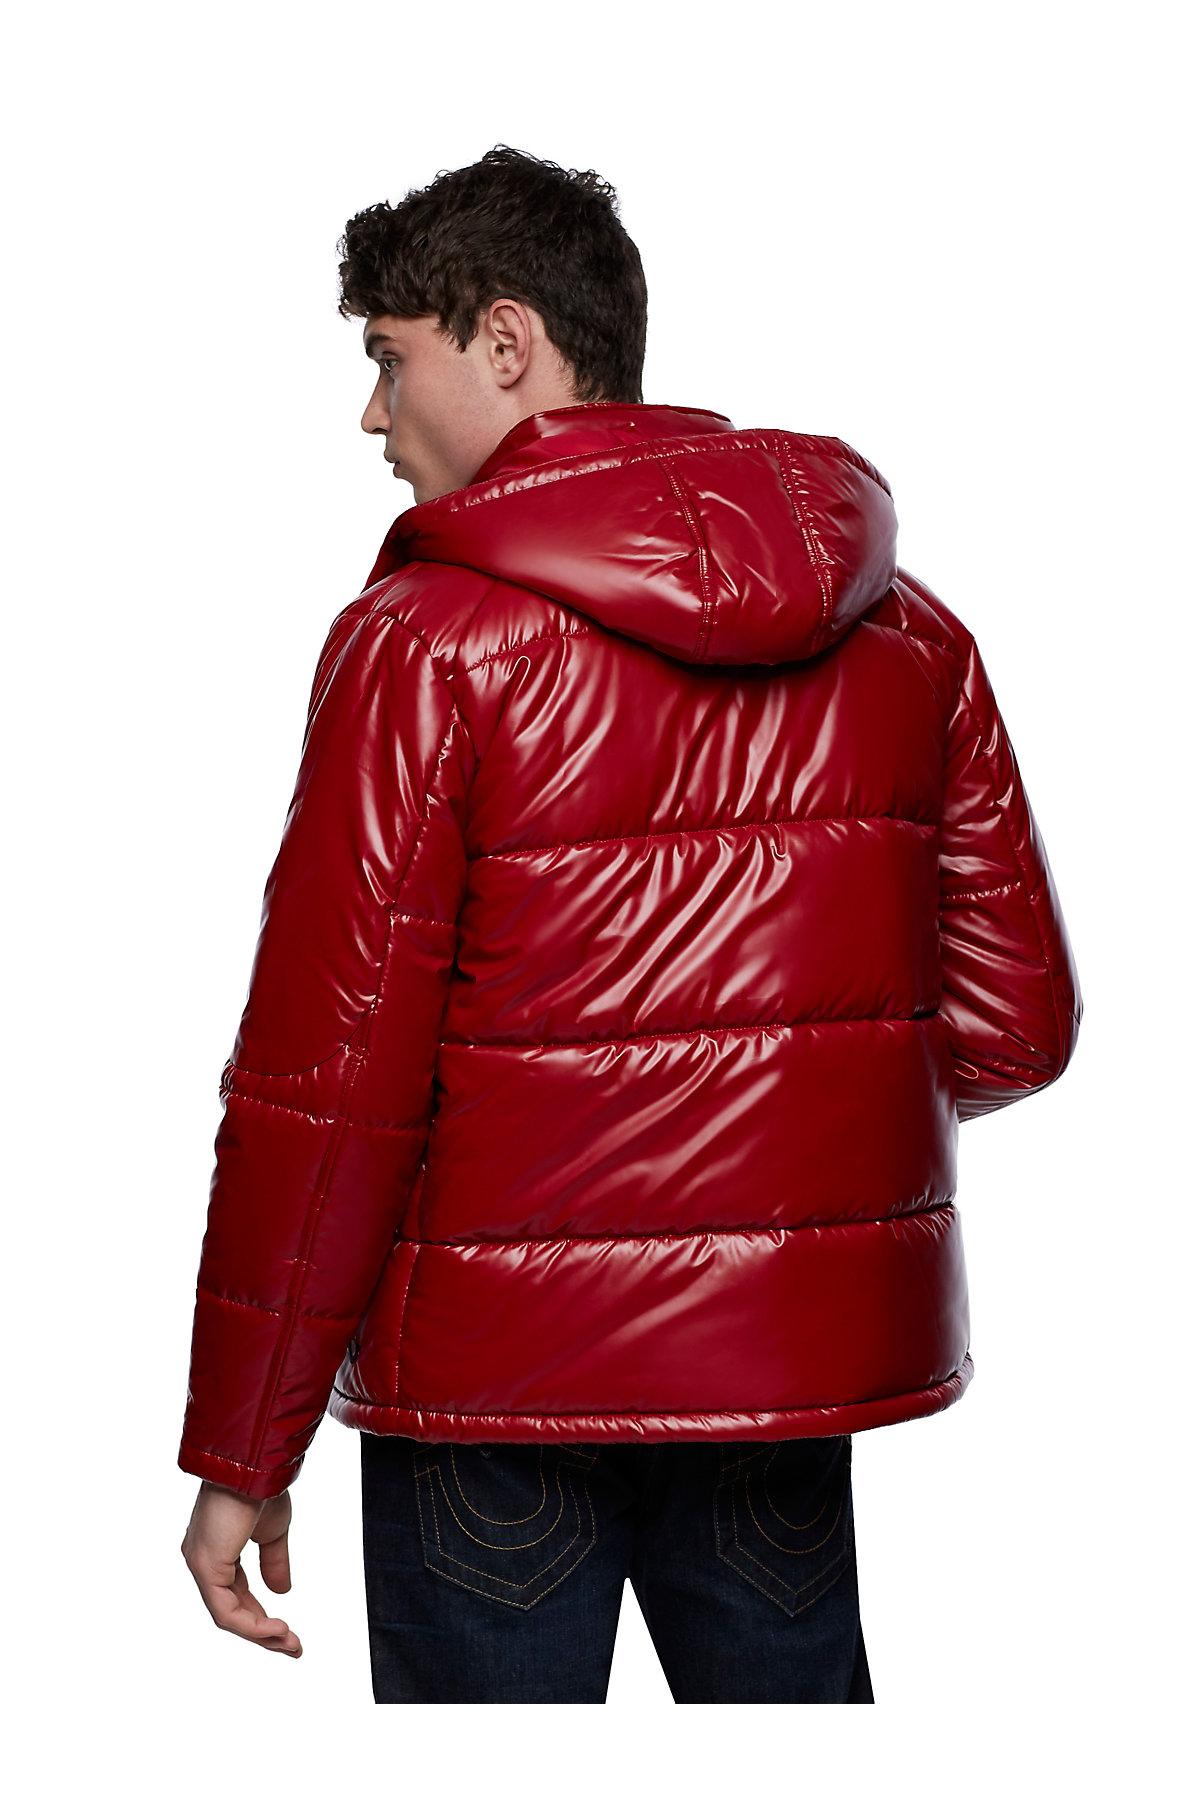 True Religion Puffer Jacket in Red for Men - Lyst